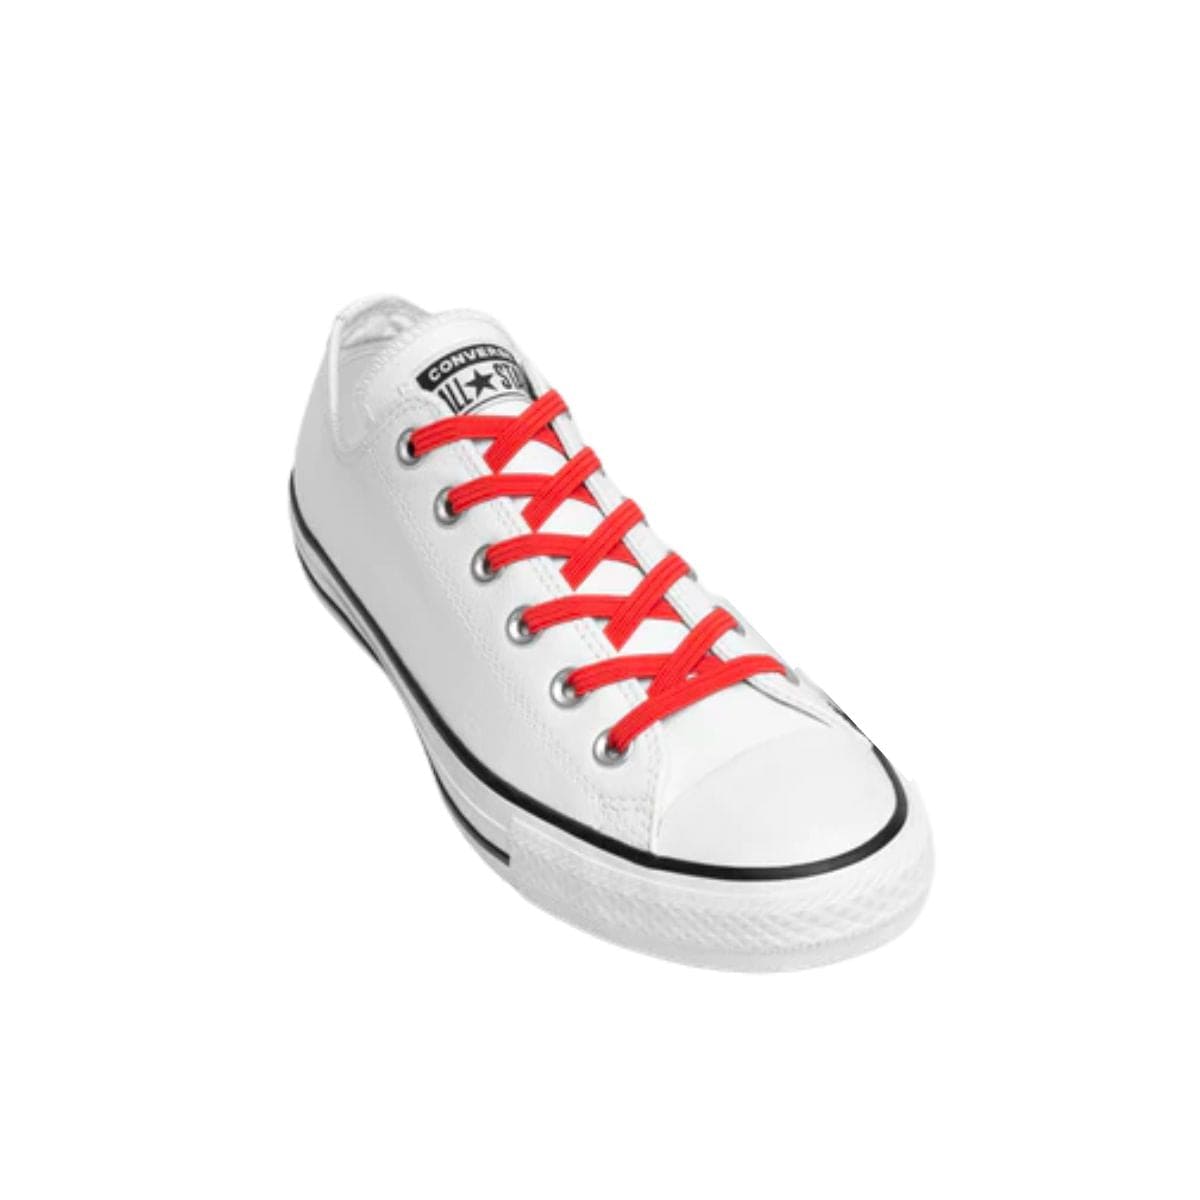 Replacement for Shoe Laces Red No-Tie Shoelaces - Kicks Shoelaces